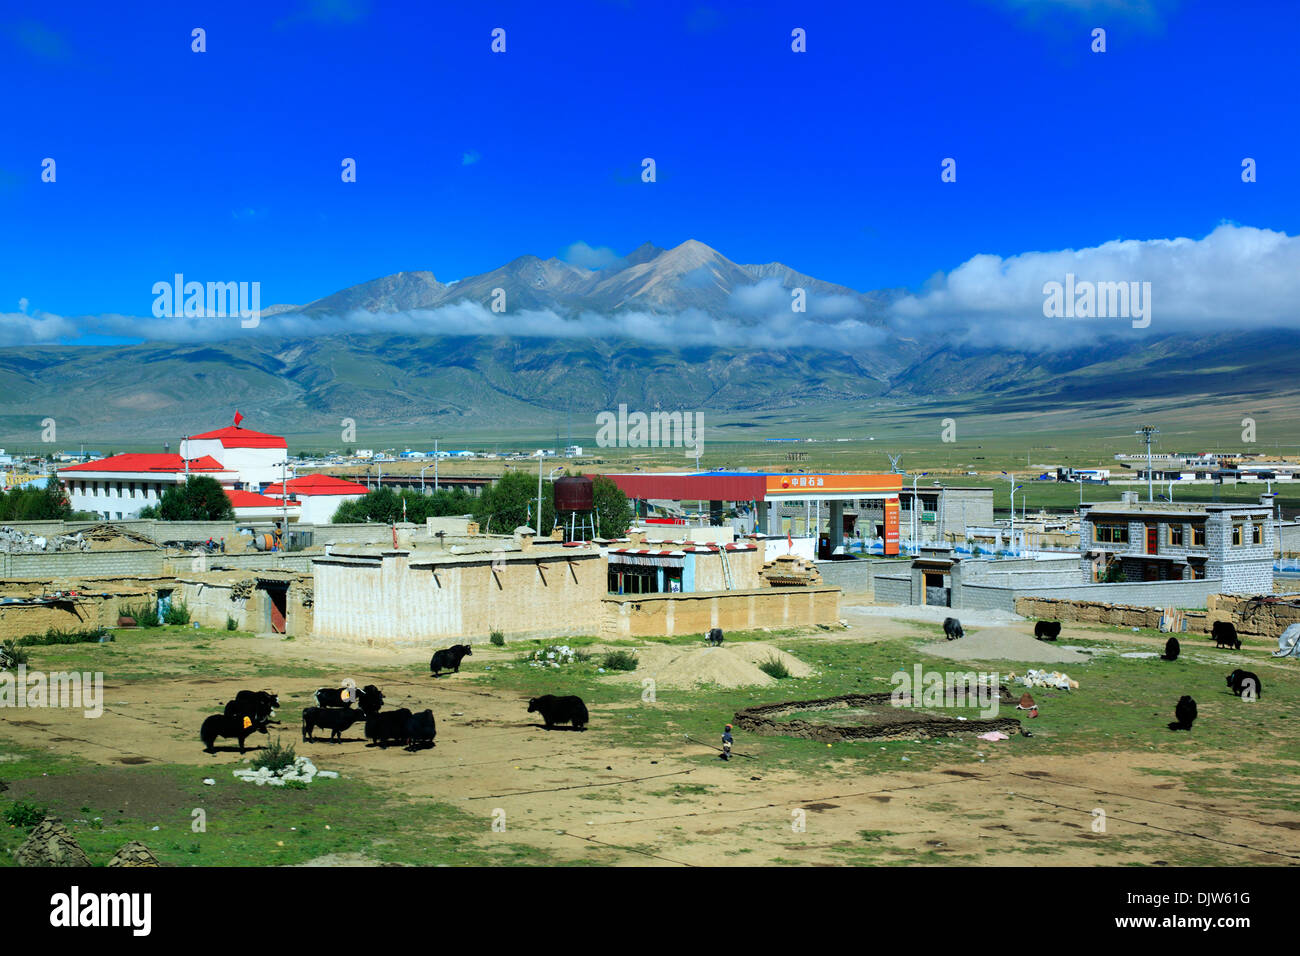 Landscape viewed from train of Trans-Tibetan Railway, Tibet, China Stock Photo